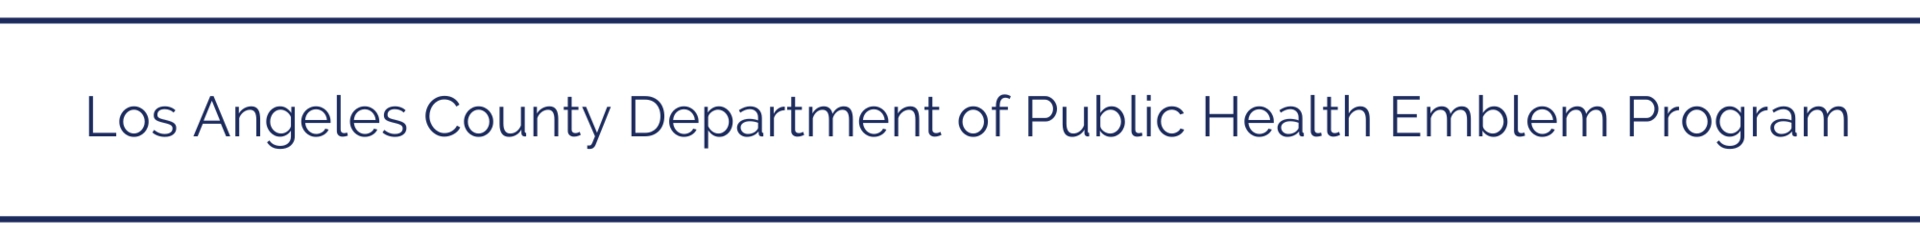 Los Angeles County Department of Public Health Emblem Program